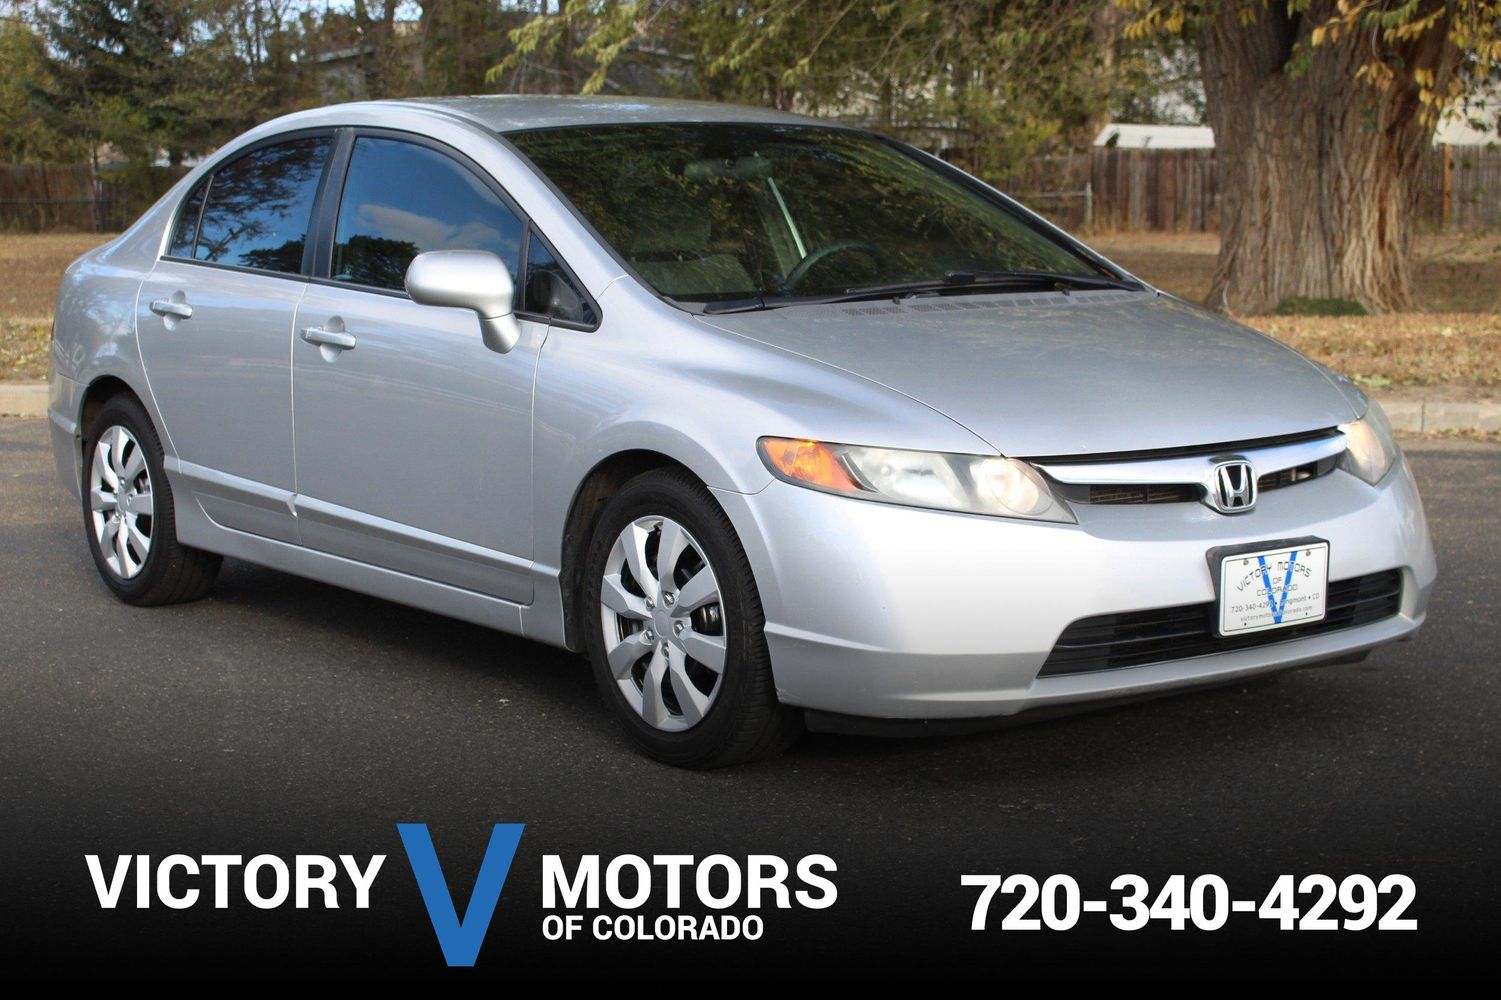 2008 Honda Civic LX | Victory Motors of Colorado